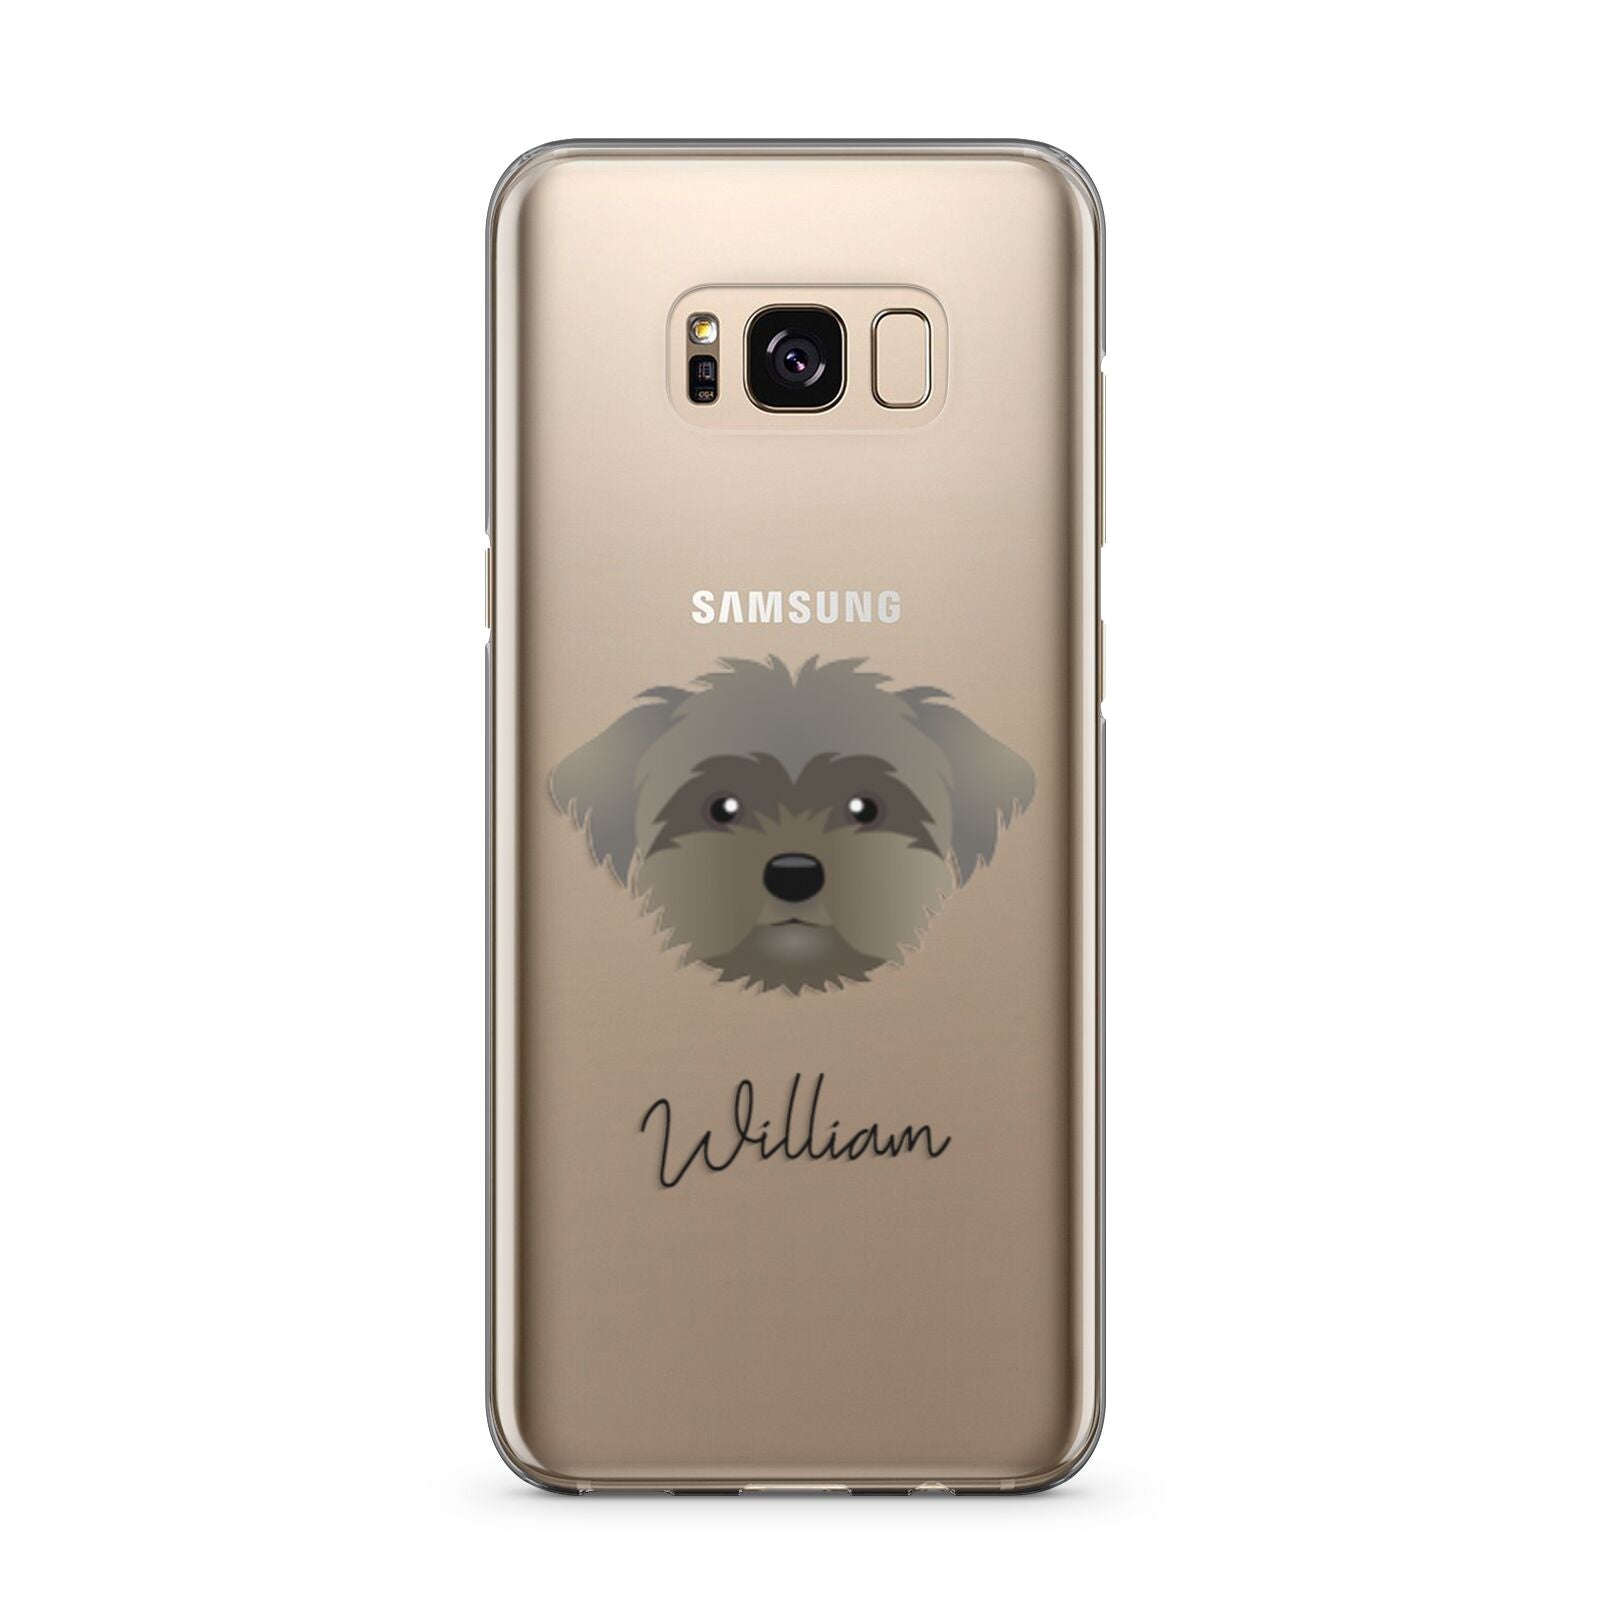 Peek a poo Personalised Samsung Galaxy S8 Plus Case